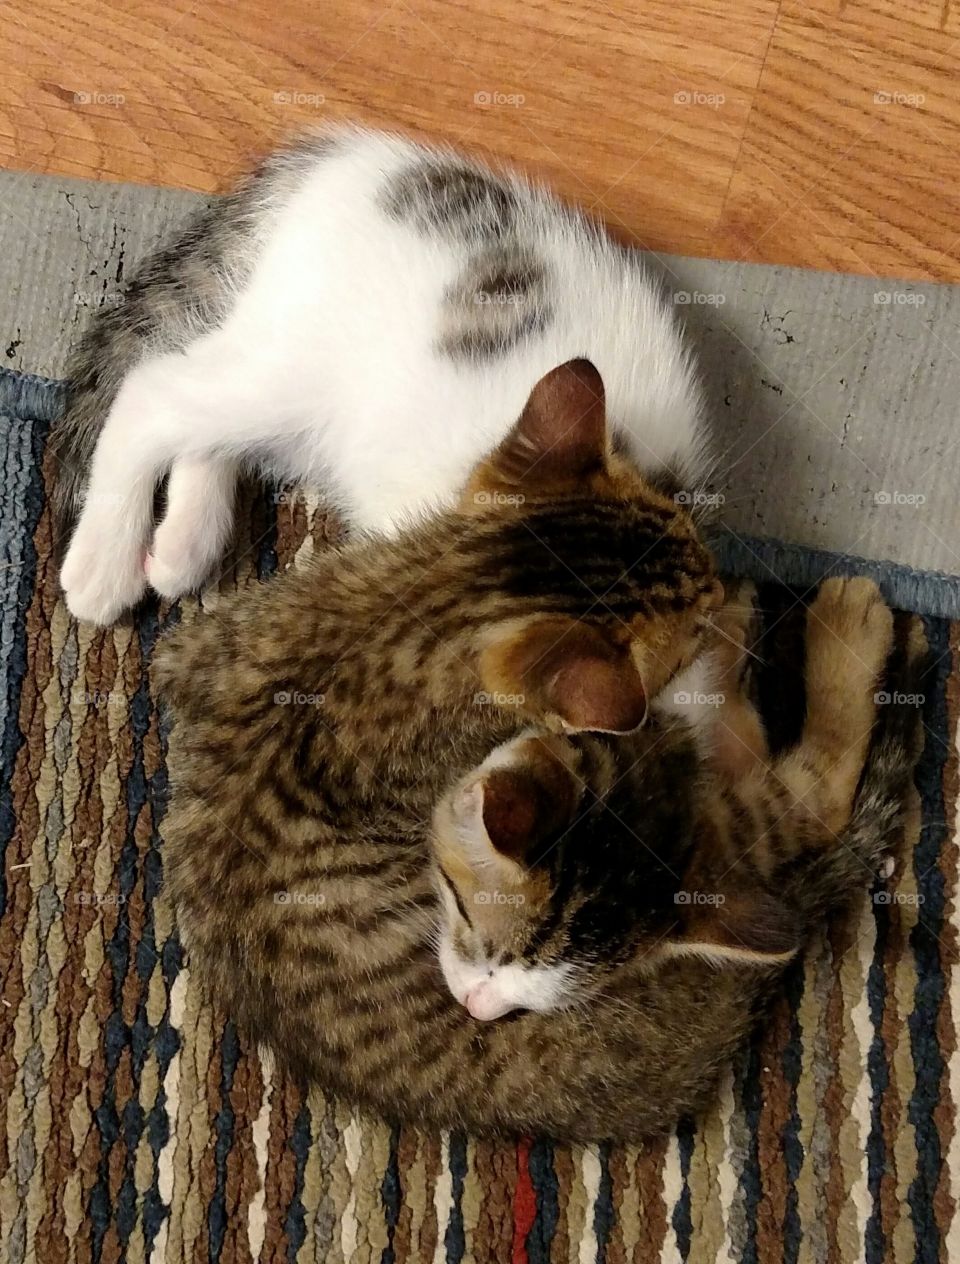 kittens snuggled up on old rug